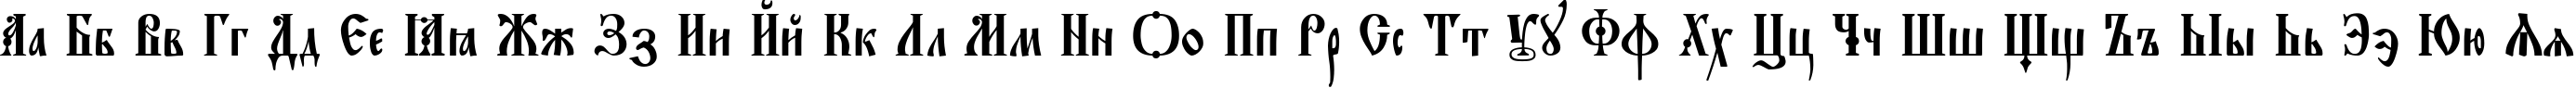 Пример написания русского алфавита шрифтом EvangelieTT